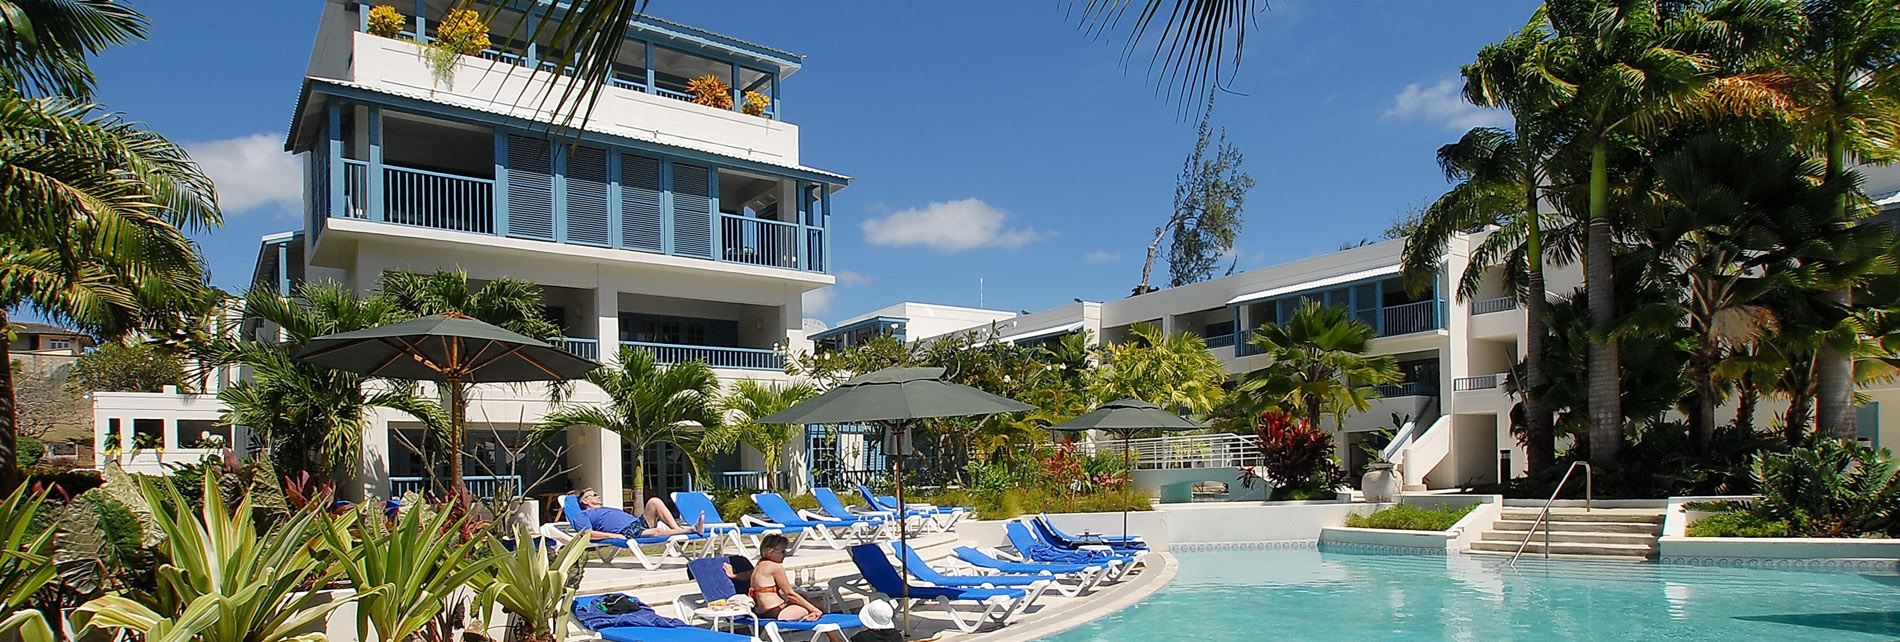 Savannah Beach Resort - Caribbean Resort